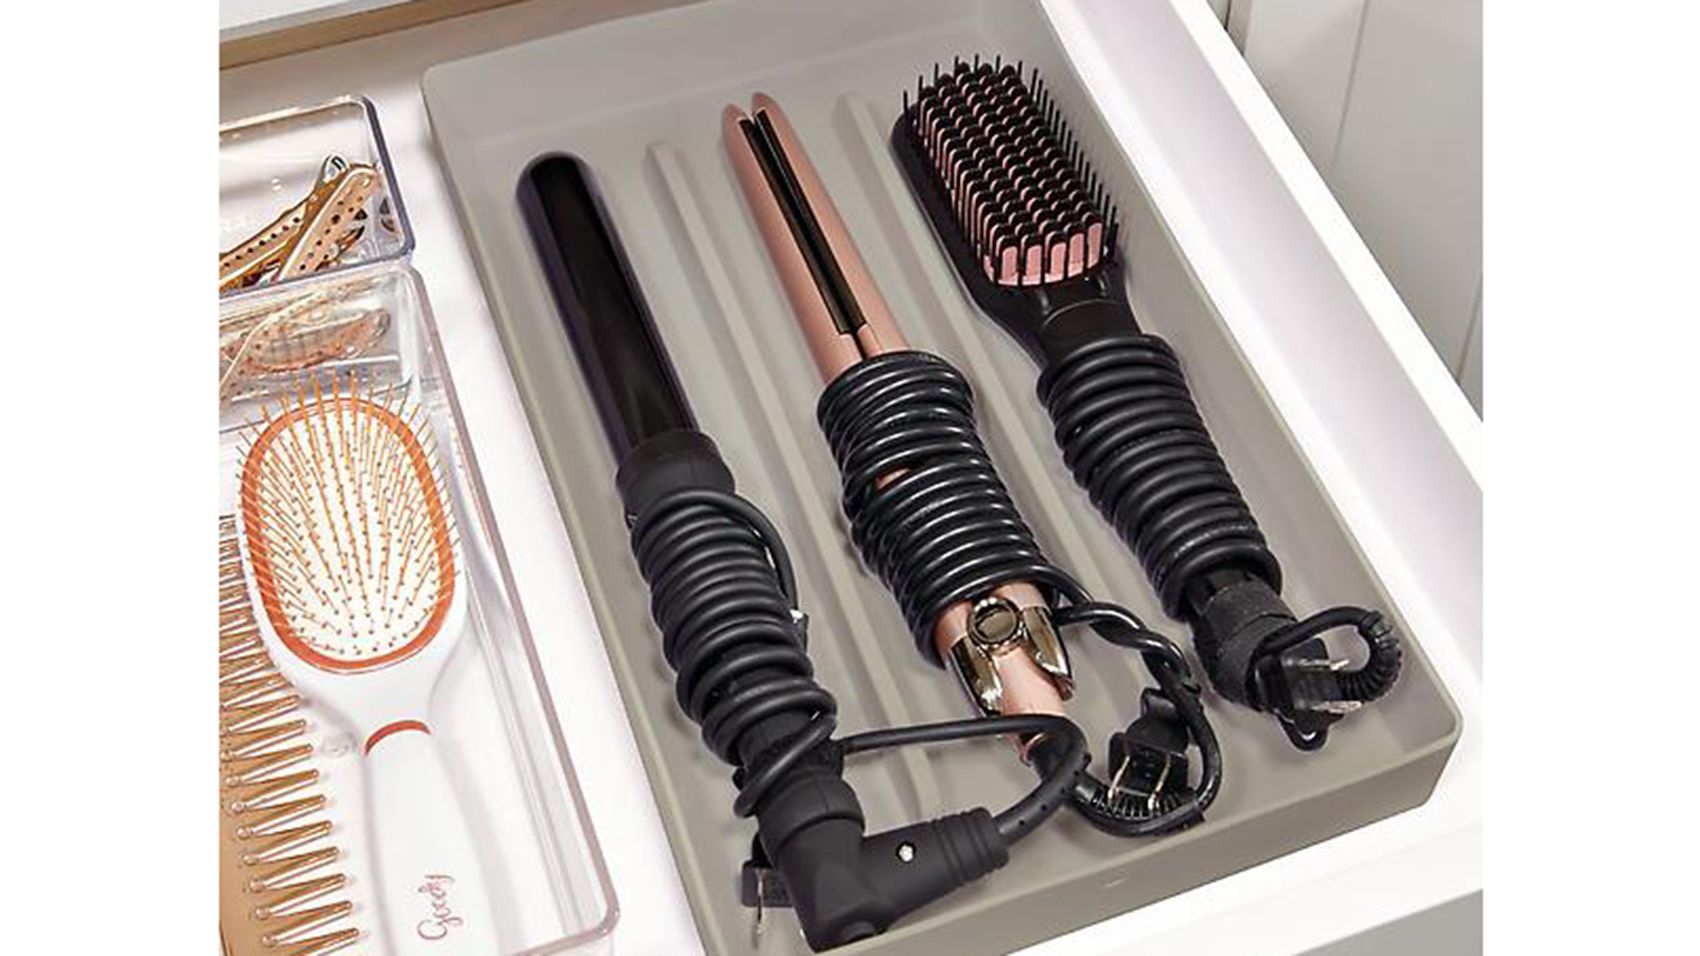 Heat Resistant Tool Organizer for Hair Dryer Curling Iron - Salon